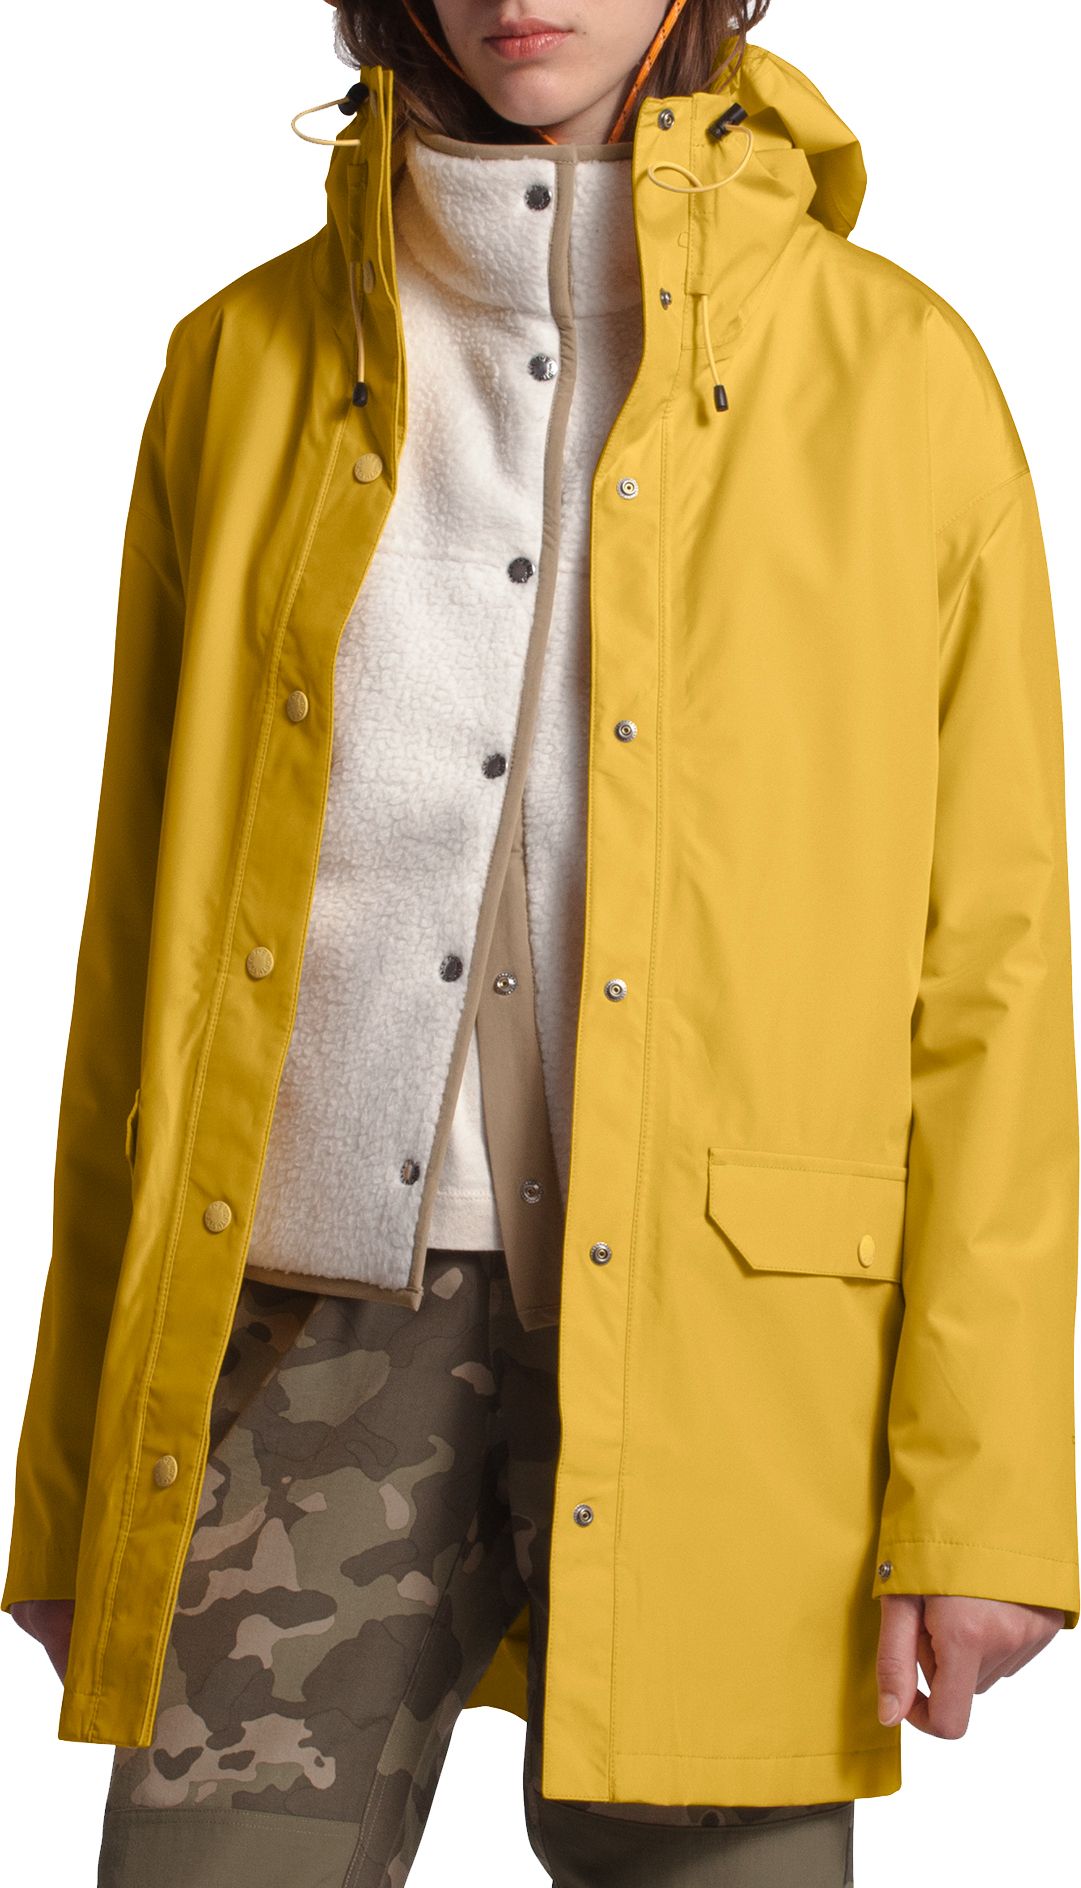 north face yellow rain jacket